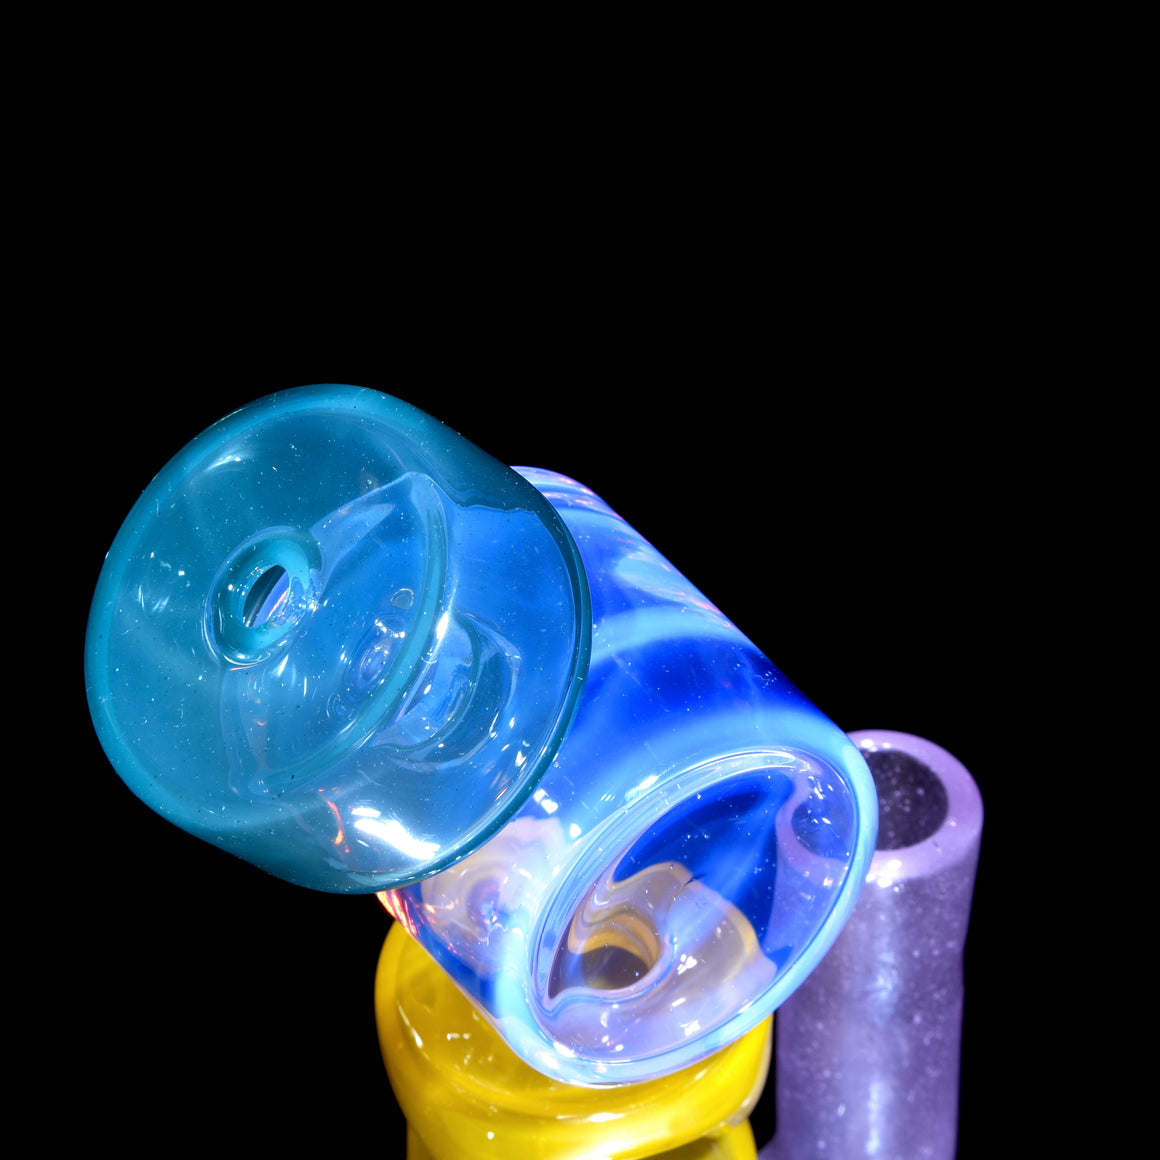 Twisted Swiss Cylinder Colorform Rig - 14mm Female